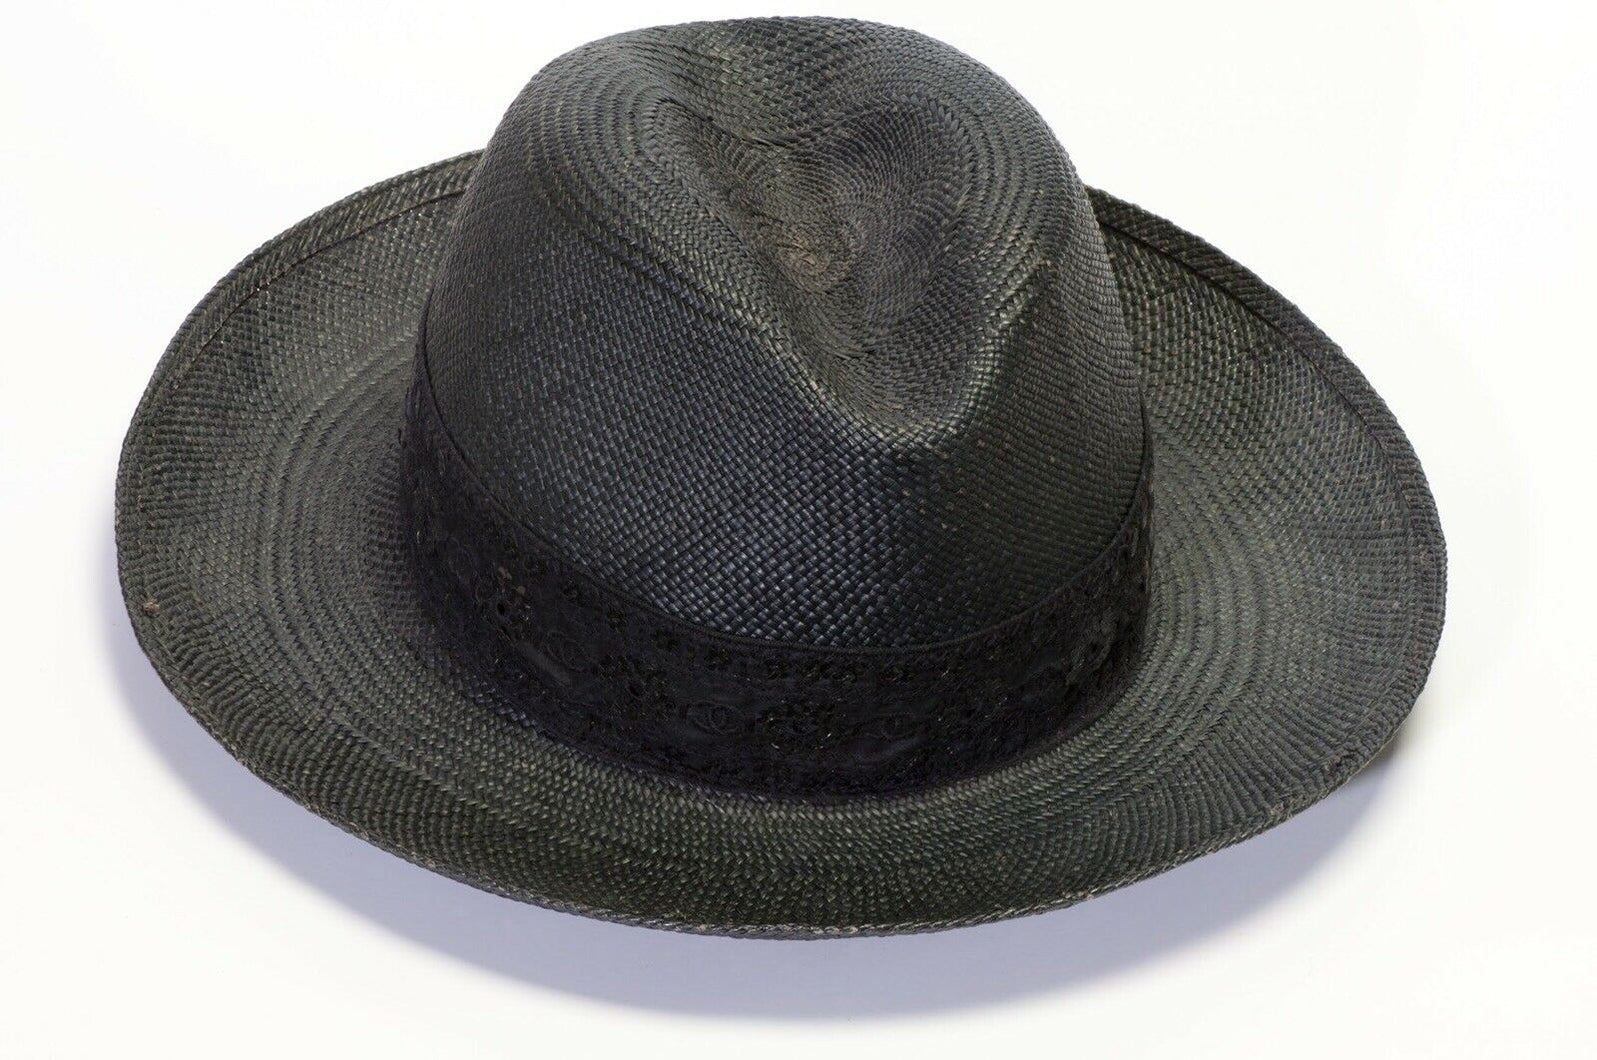 hat chanel-2006-black-straw-women-s-fedora-hat